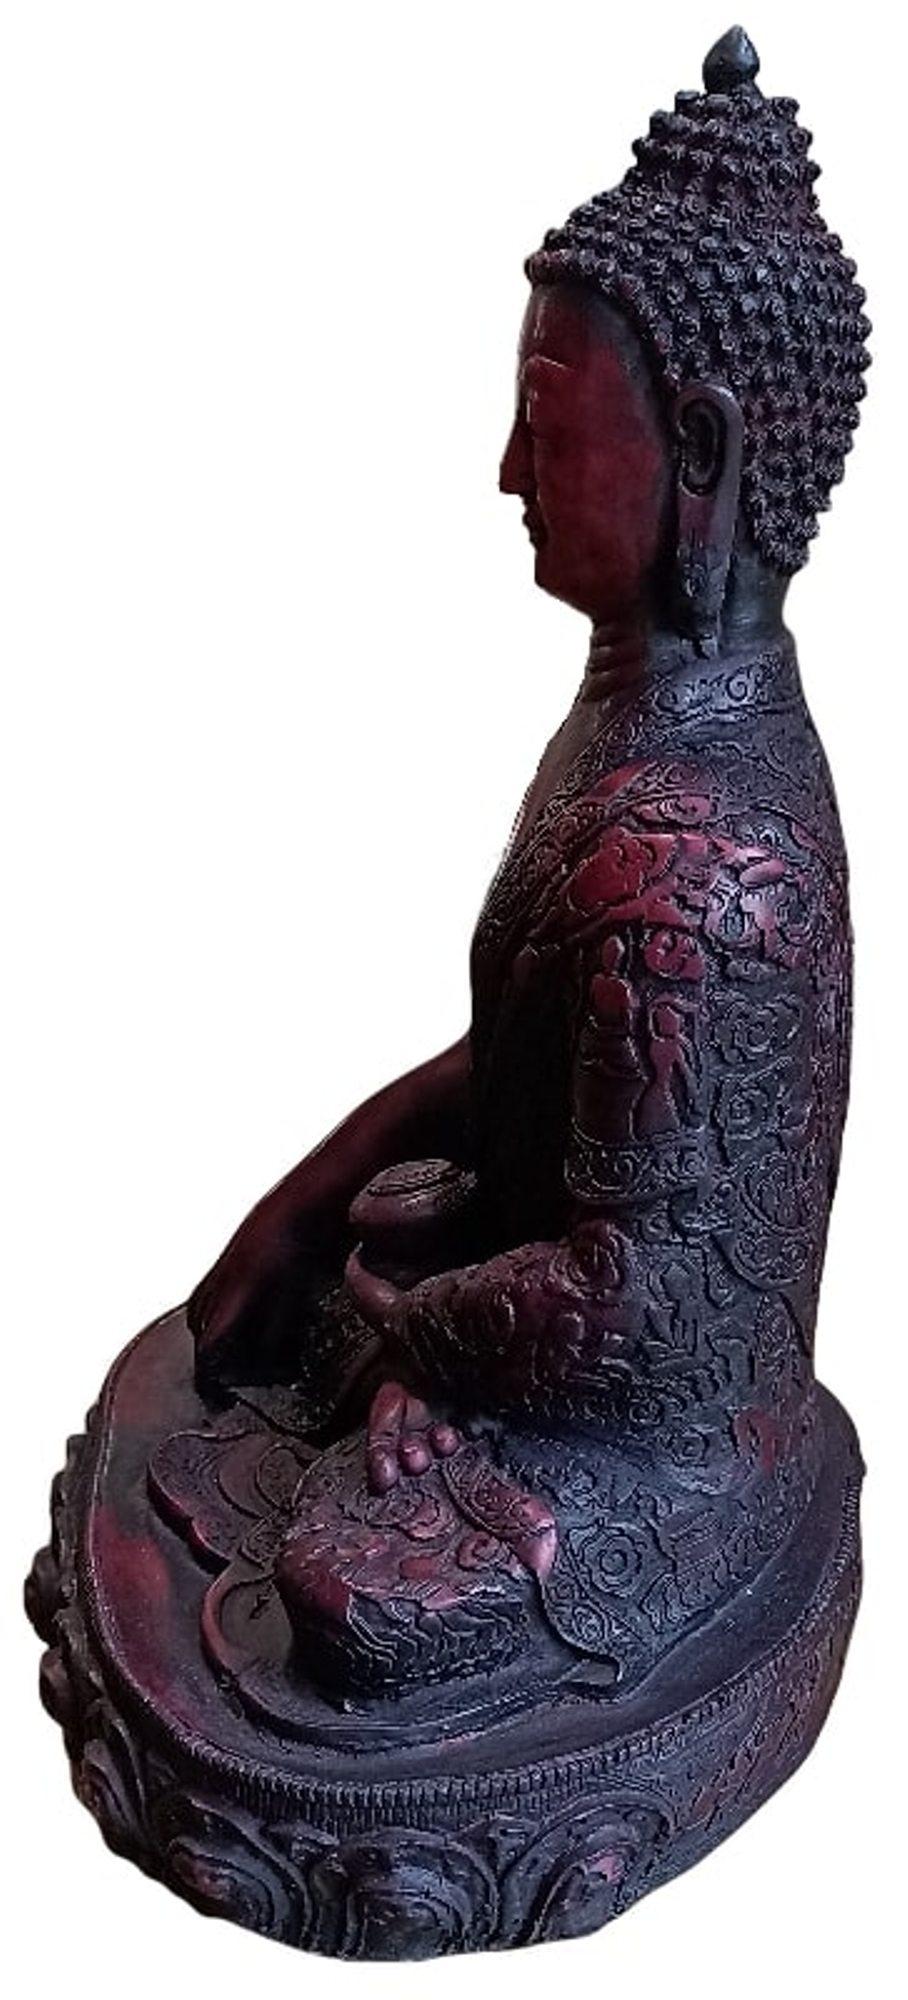 Artifacts
Goutam Buddha
Sculpture ( Resin )
H 14.5 x W 11 x D 8.5 inches